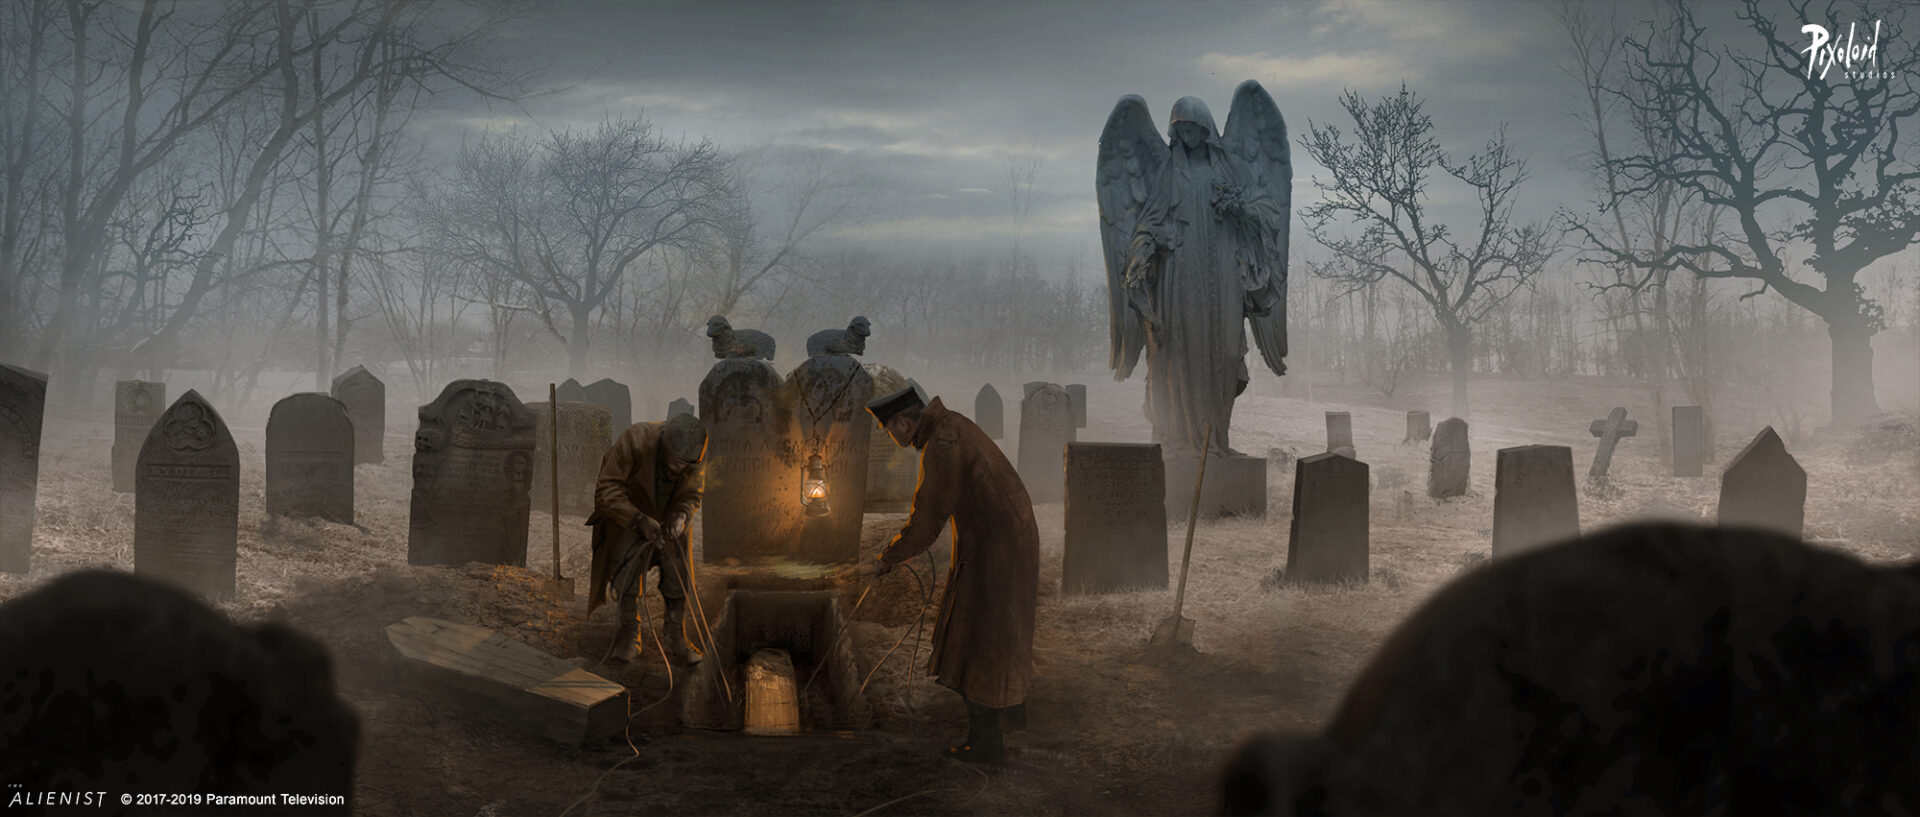 Graveyard / Zweig Twins Exhumation - Keyframe concept for The Alienist